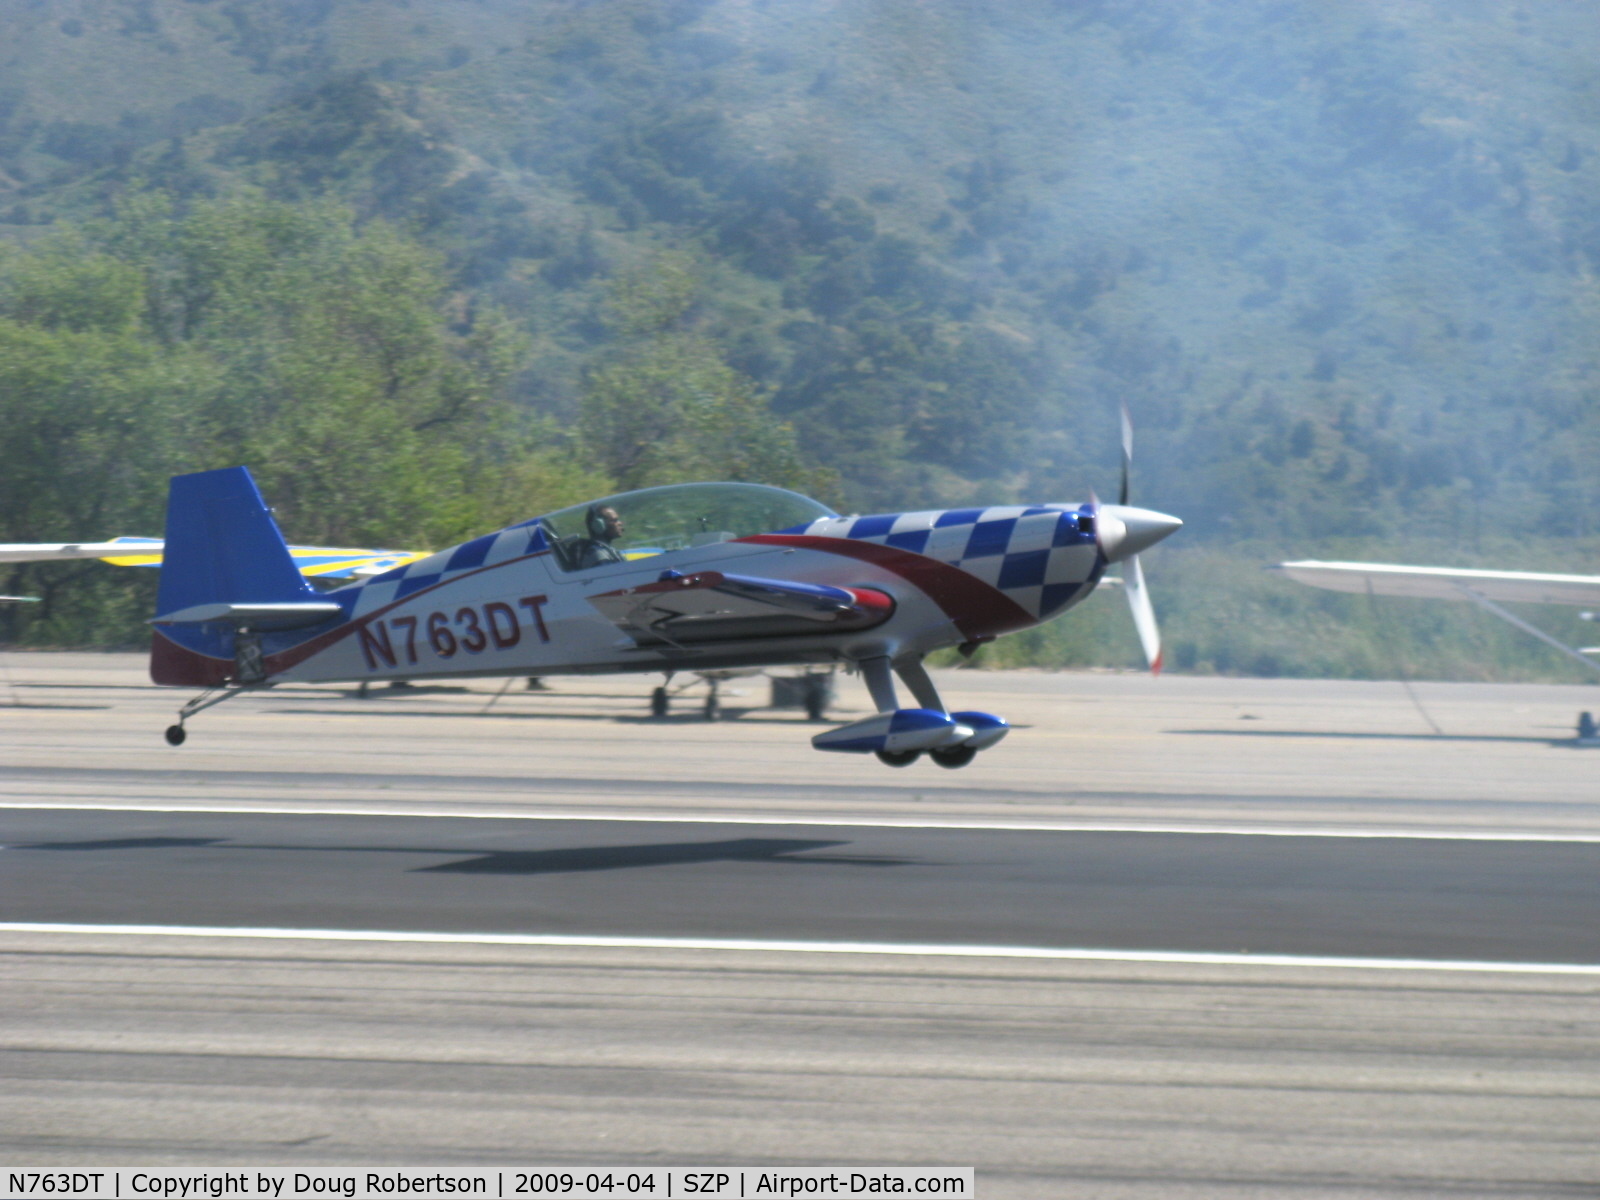 N763DT, 2007 Extra EA-300/L C/N 1258, 2007 Extra Flugzeugproduktions EXTRA EA 300L, Lycoming AEIO-540-L1B5 300 Hp, takeoff climb Rwy 22 through dissipating airshow smoke from N64SH